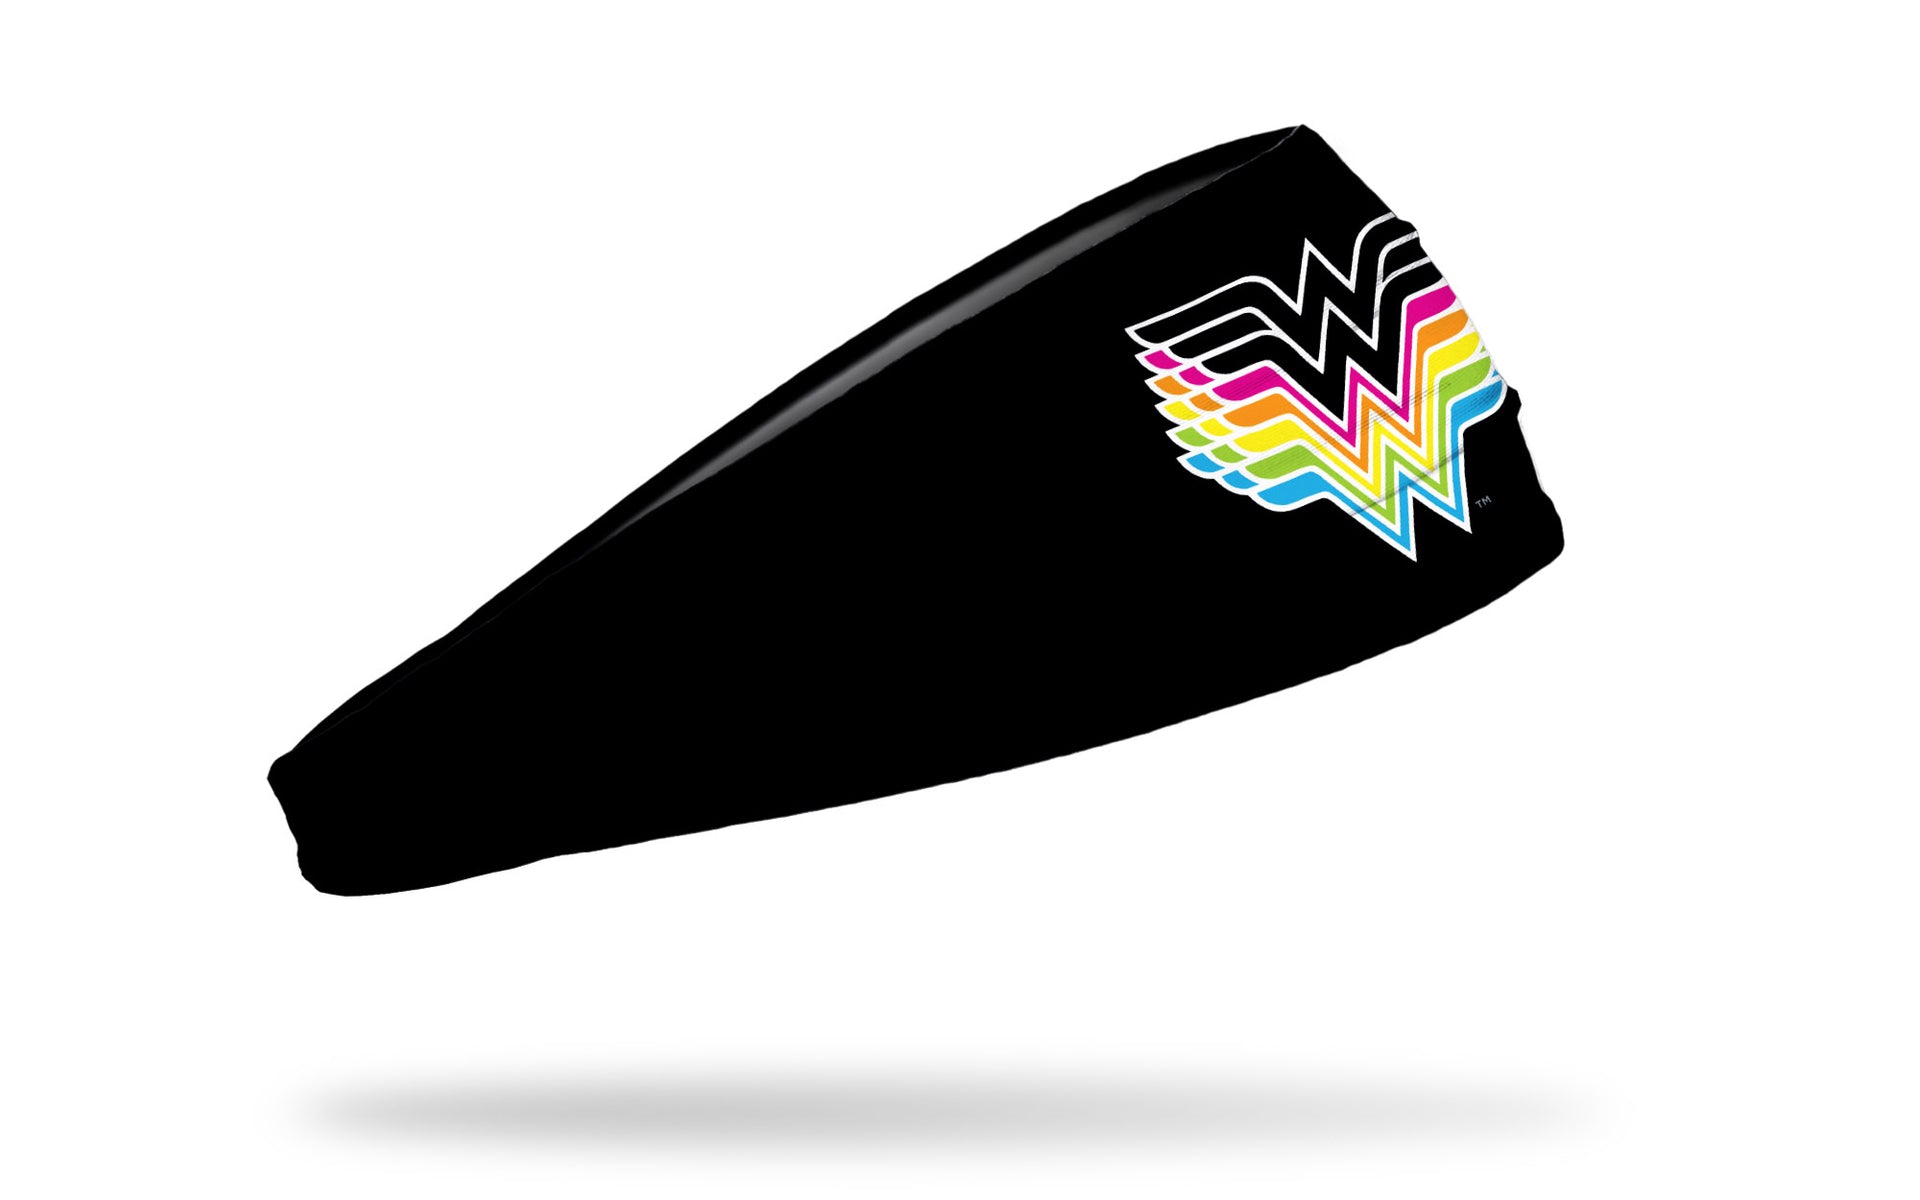 black headband with DC Comic Wonder Woman logo in fading neon colors